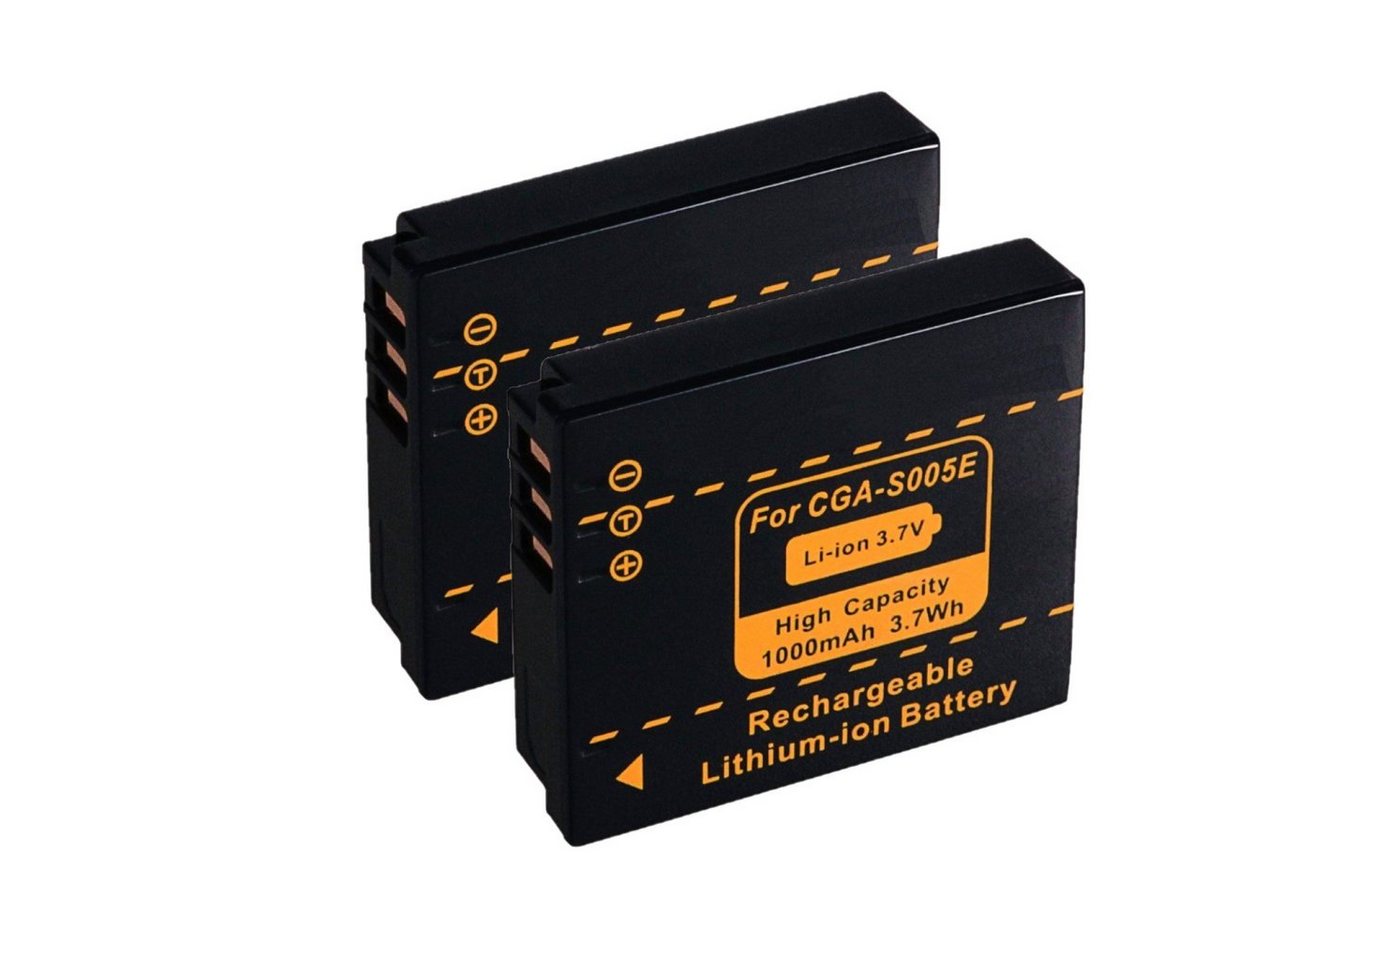 GOLDBATT 2x Akku für Panasonic Lumix DMC-FX3 FX07 DMC-FX50 DMC-LX2 CGA-S005 DMC-FX01 Kamera-Akku Ersatzakku 1000 mAh (3,7 V, 2 St), 100% kompatibel mit den Original Akkus durch maßgefertigte Passform inklusive Überhitzungsschutz von GOLDBATT